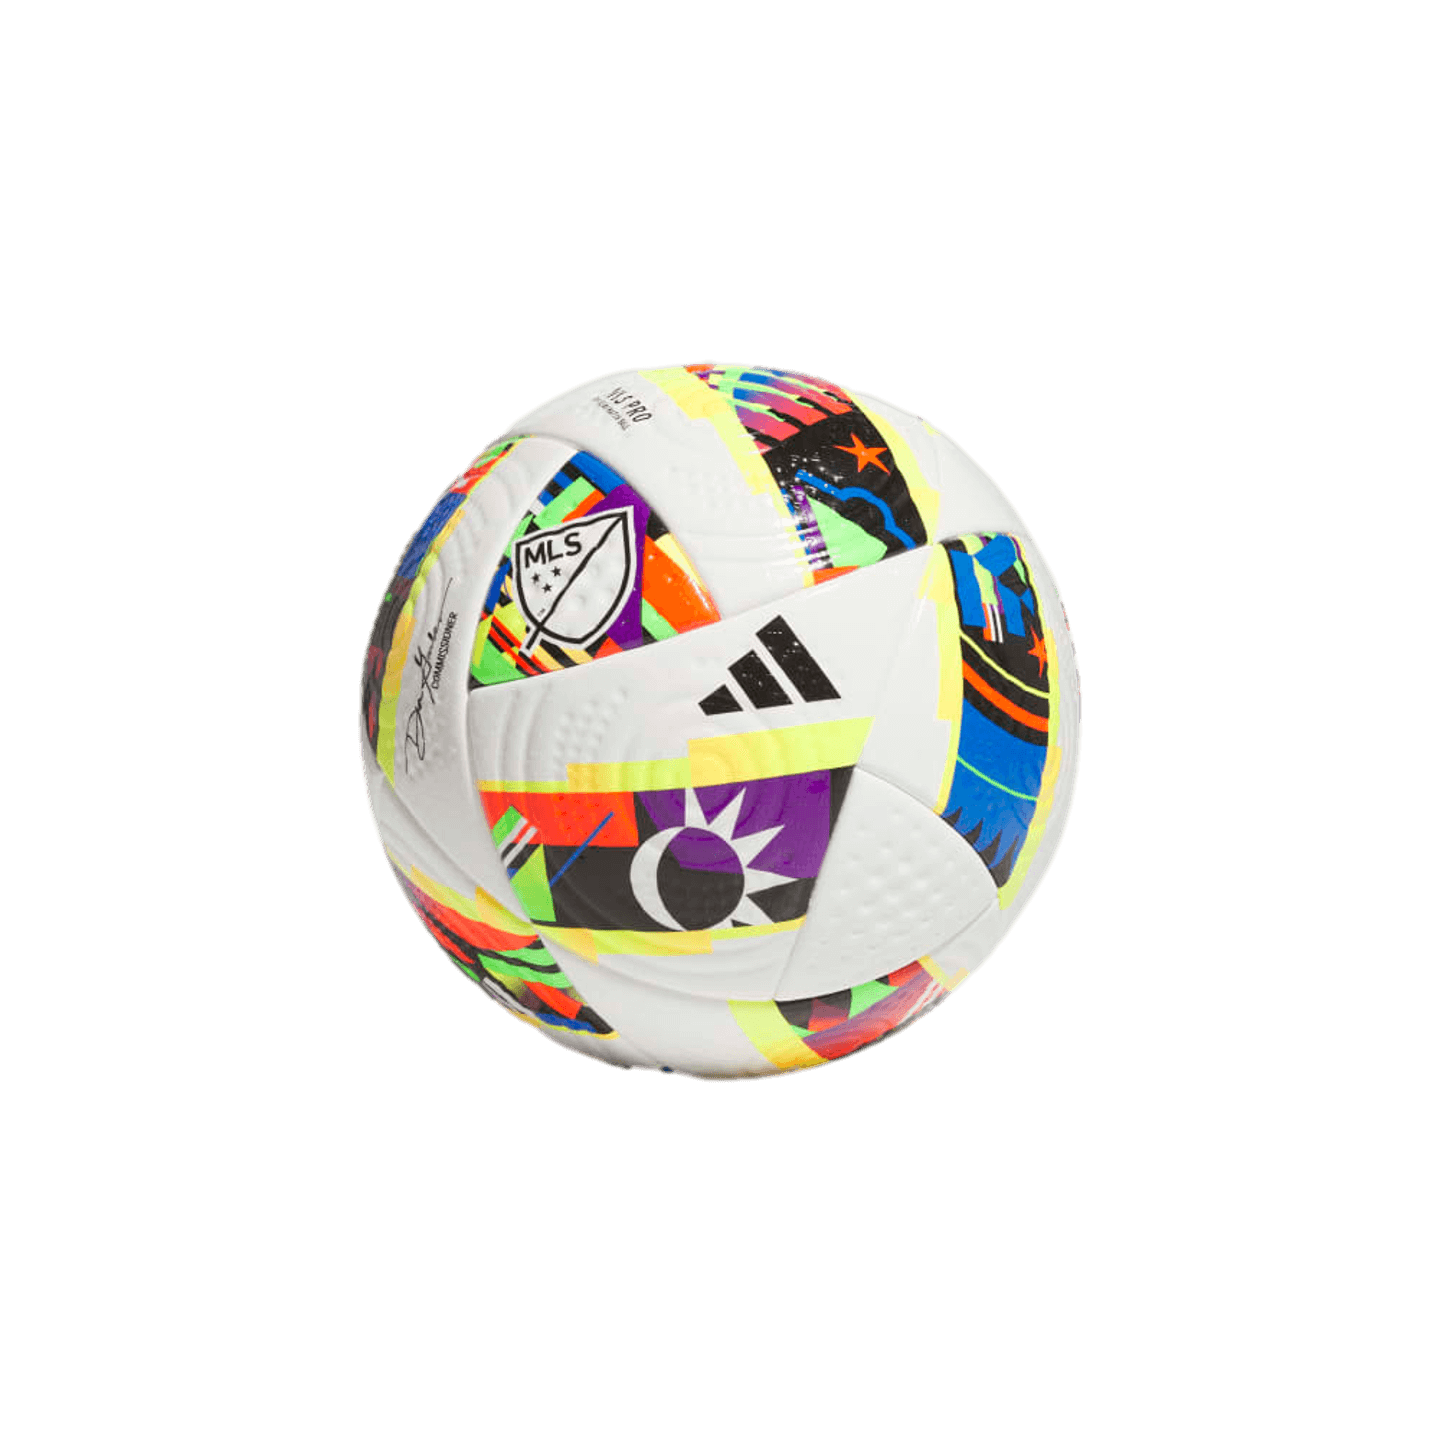 Adidas MLS Pro Match Ball